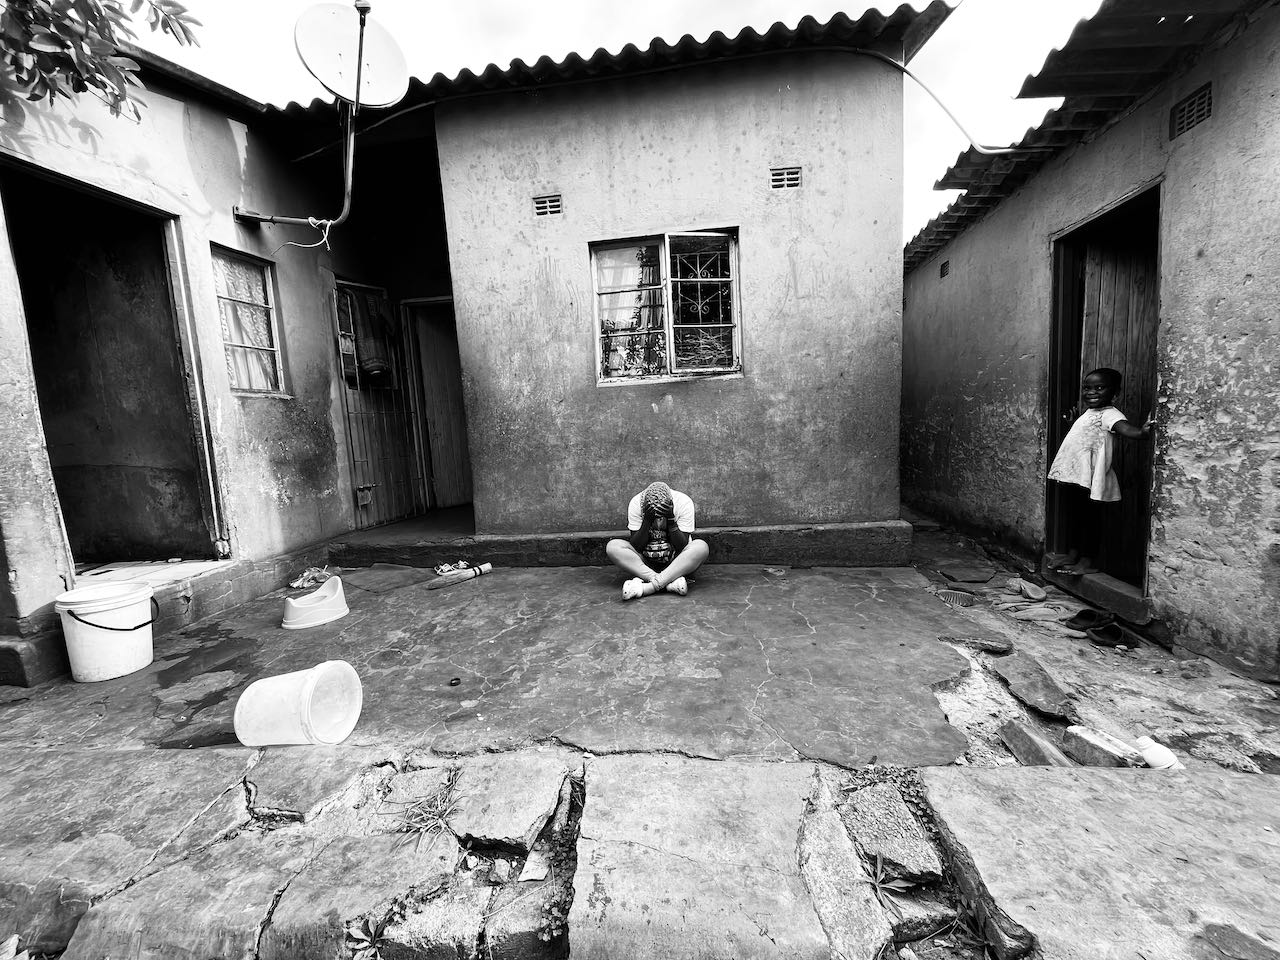 Kanukai at the family home in Highfields, Zimbabwe